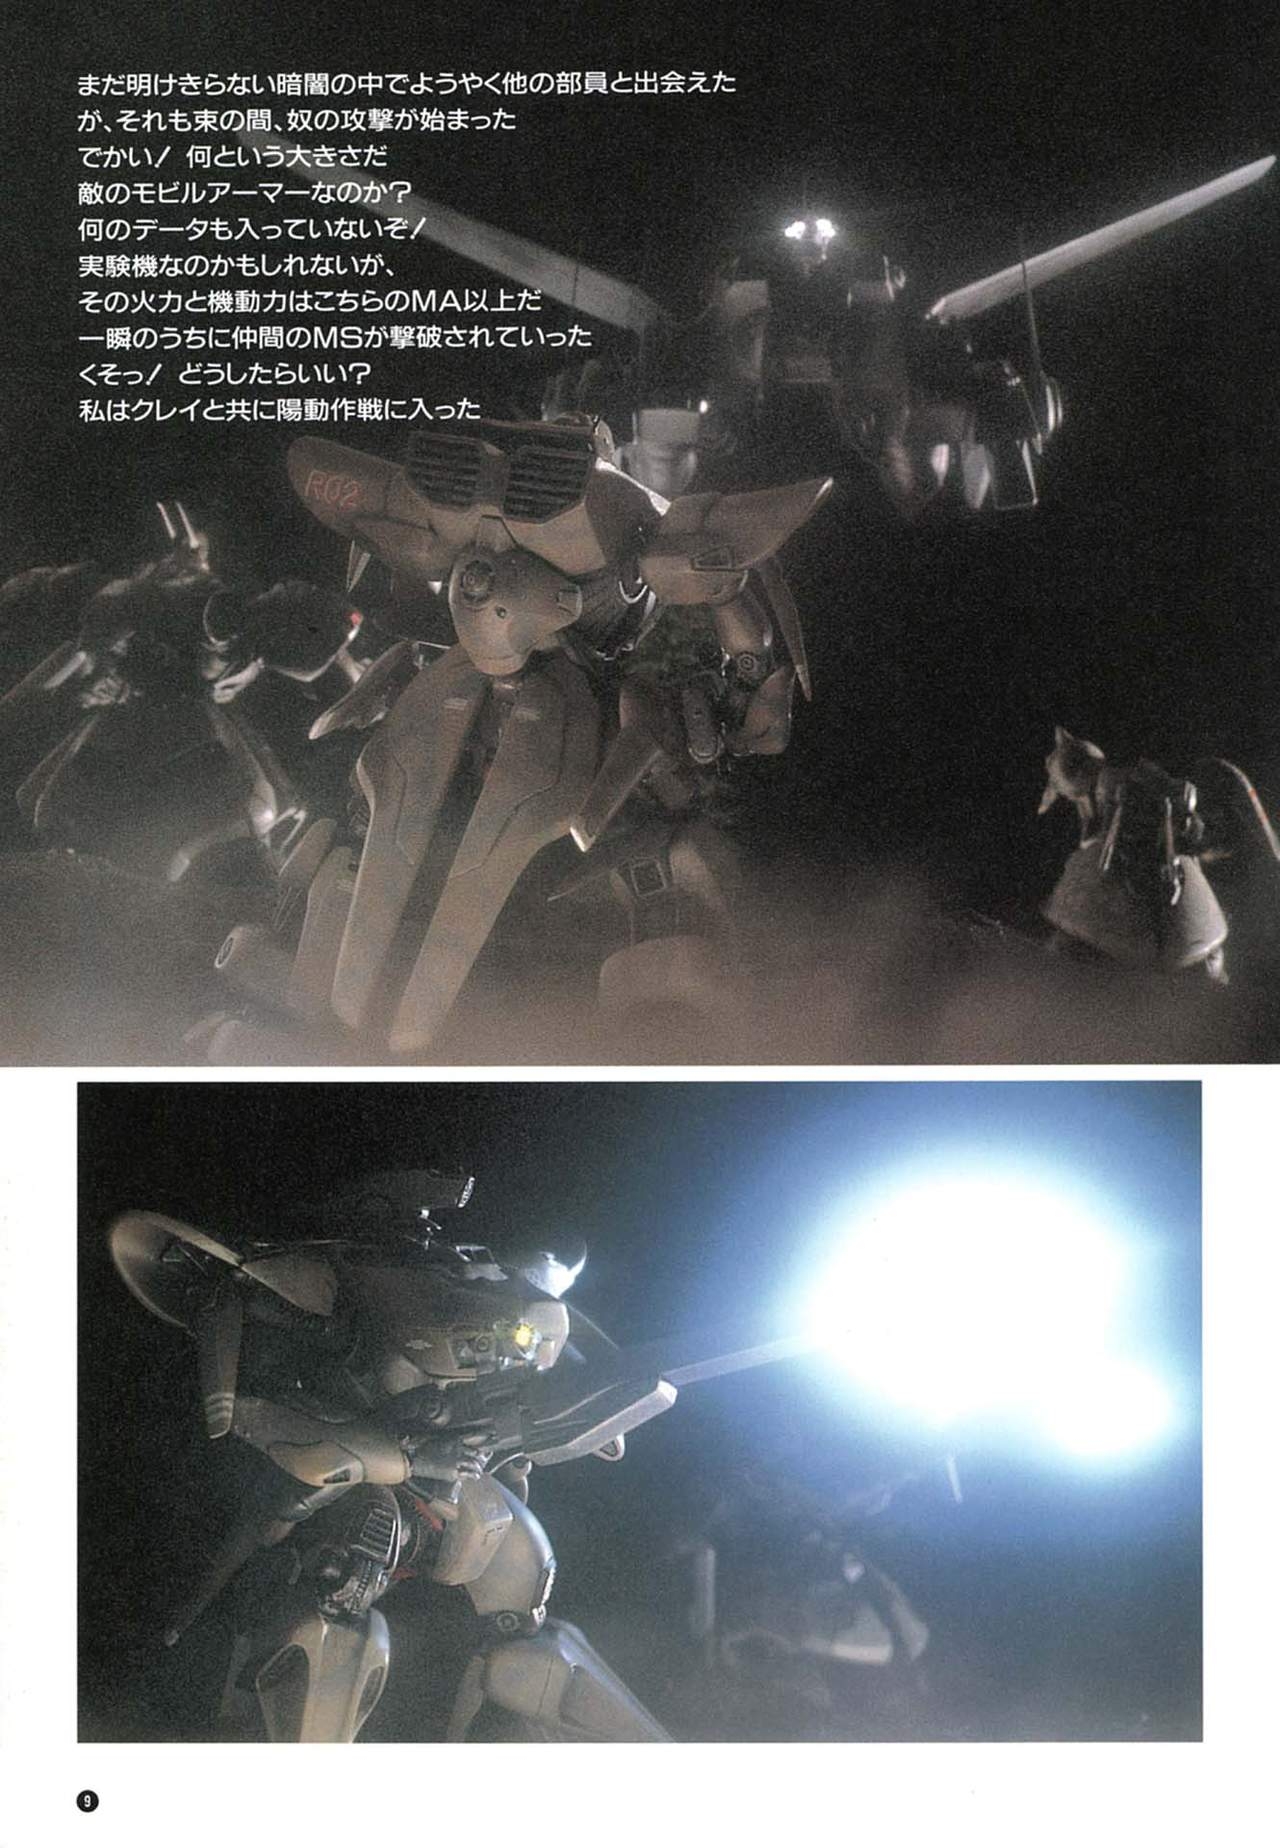 [Kazuhisa Kondo] Kazuhisa Kondo 2D & 3D Works - Go Ahead - From Mobile Suit Gundam to Original Mechanism 8